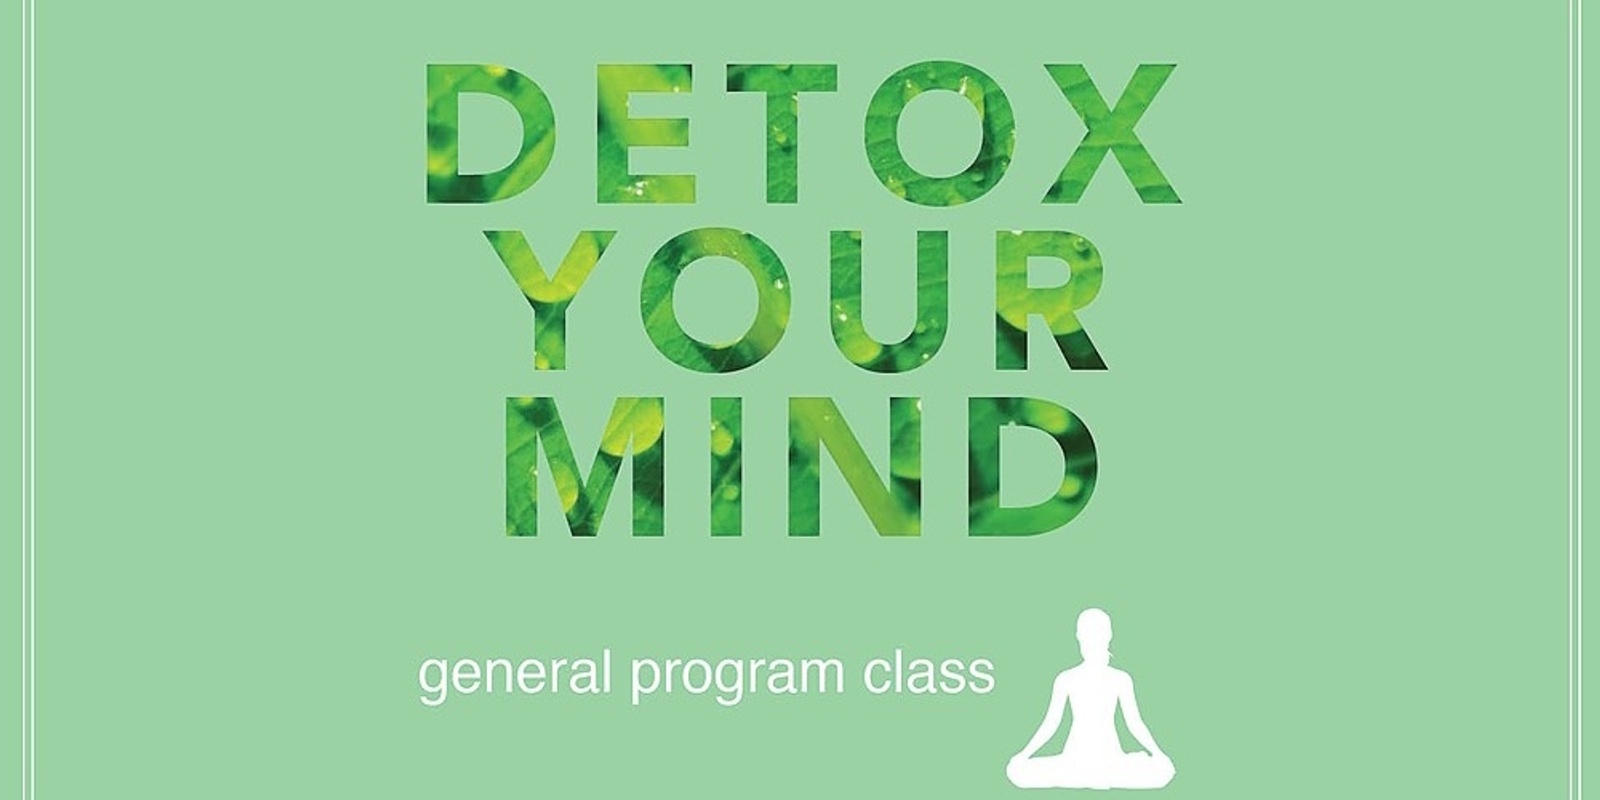 Banner image for Terrigal - Detox Your Mind - 11am